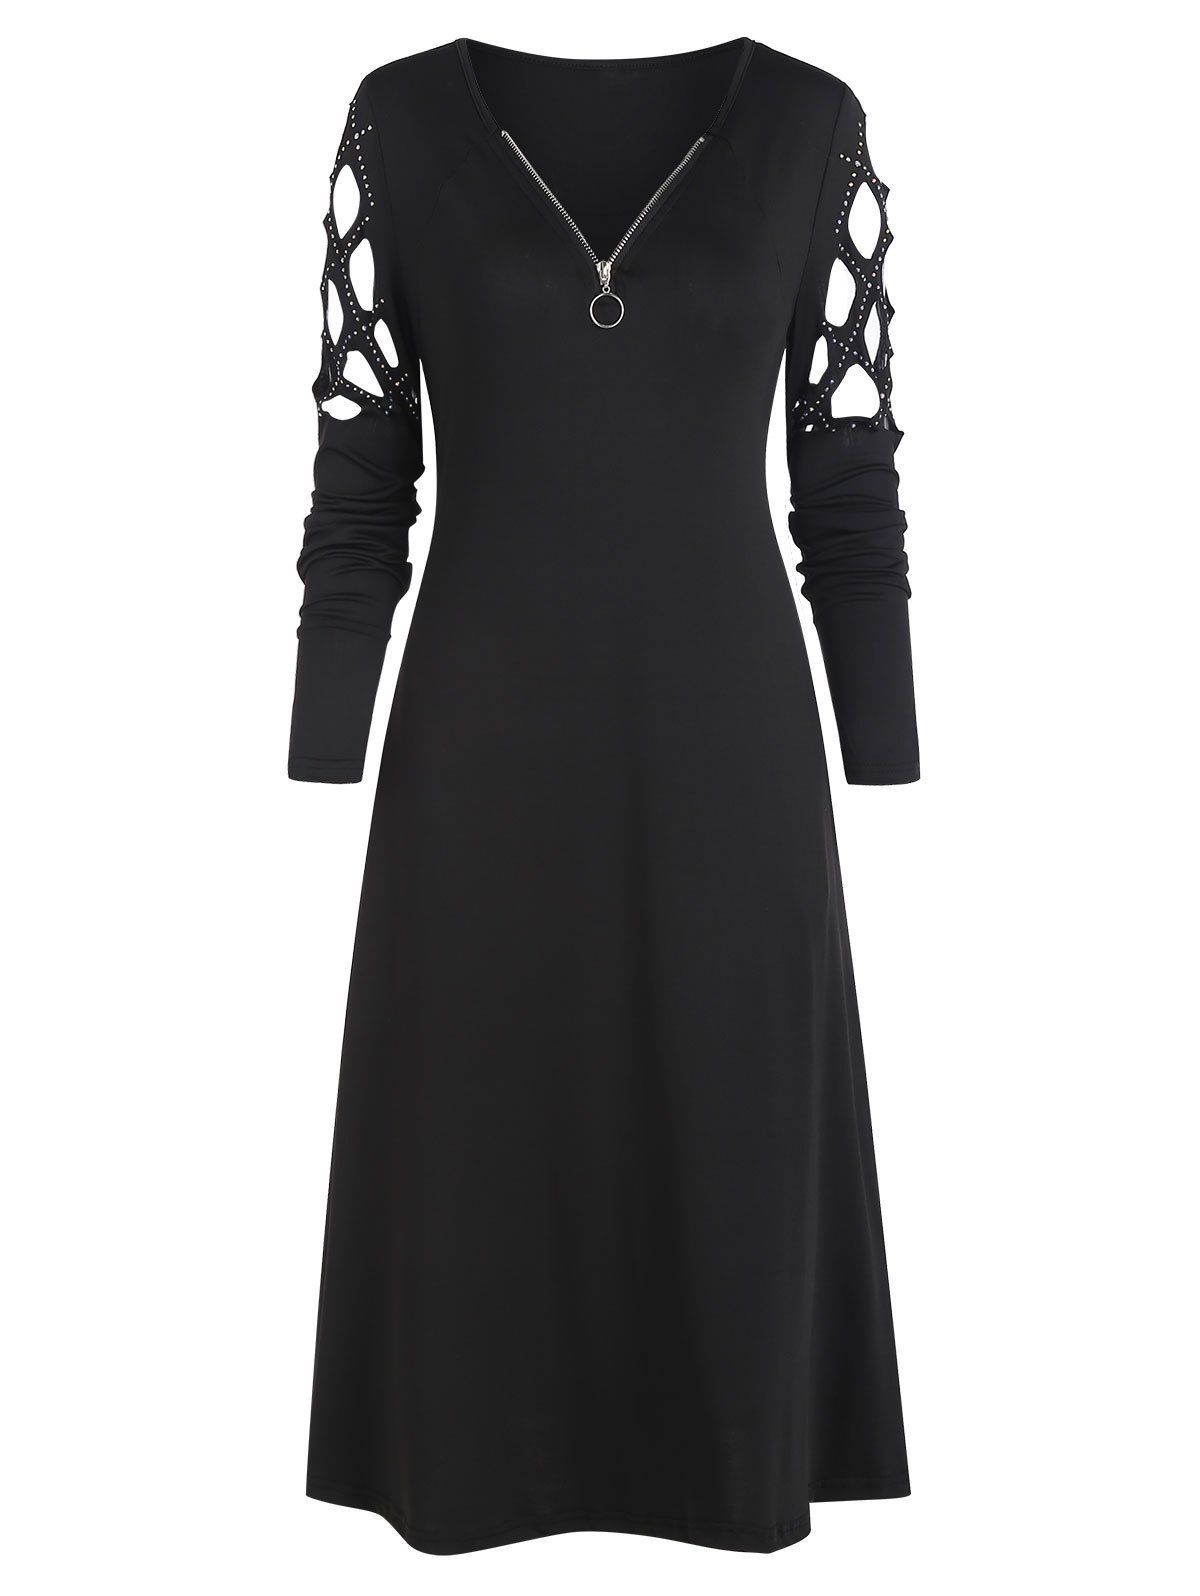 Rhinestone Caged Sleeve O Ring Zip Dress - BLACK L